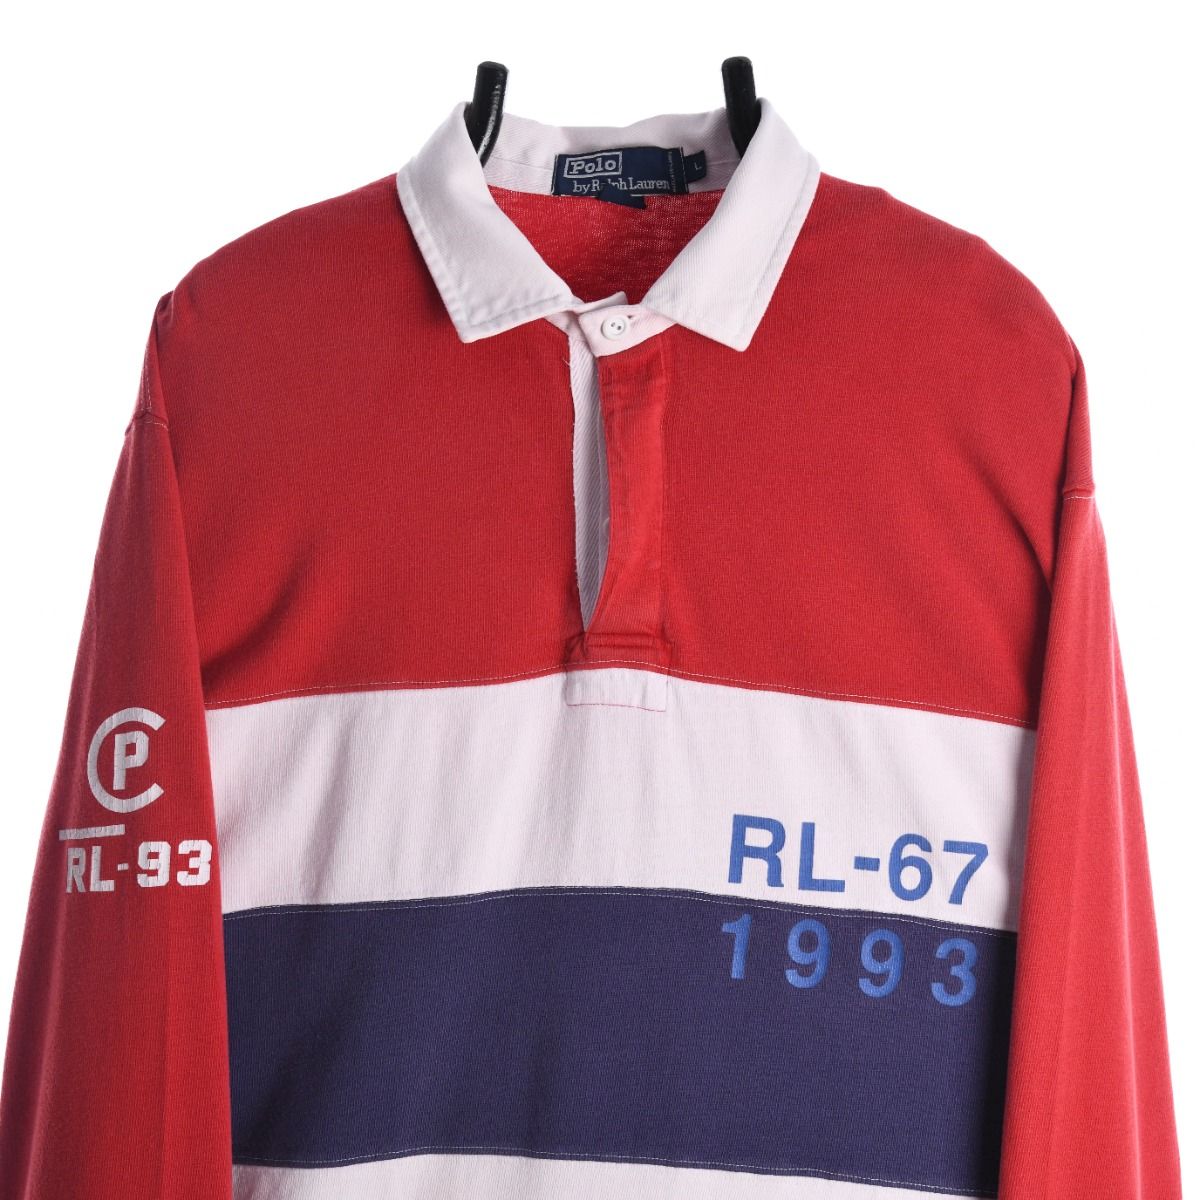 Polo Ralph Lauren CP RL-93 Rugby Shirt